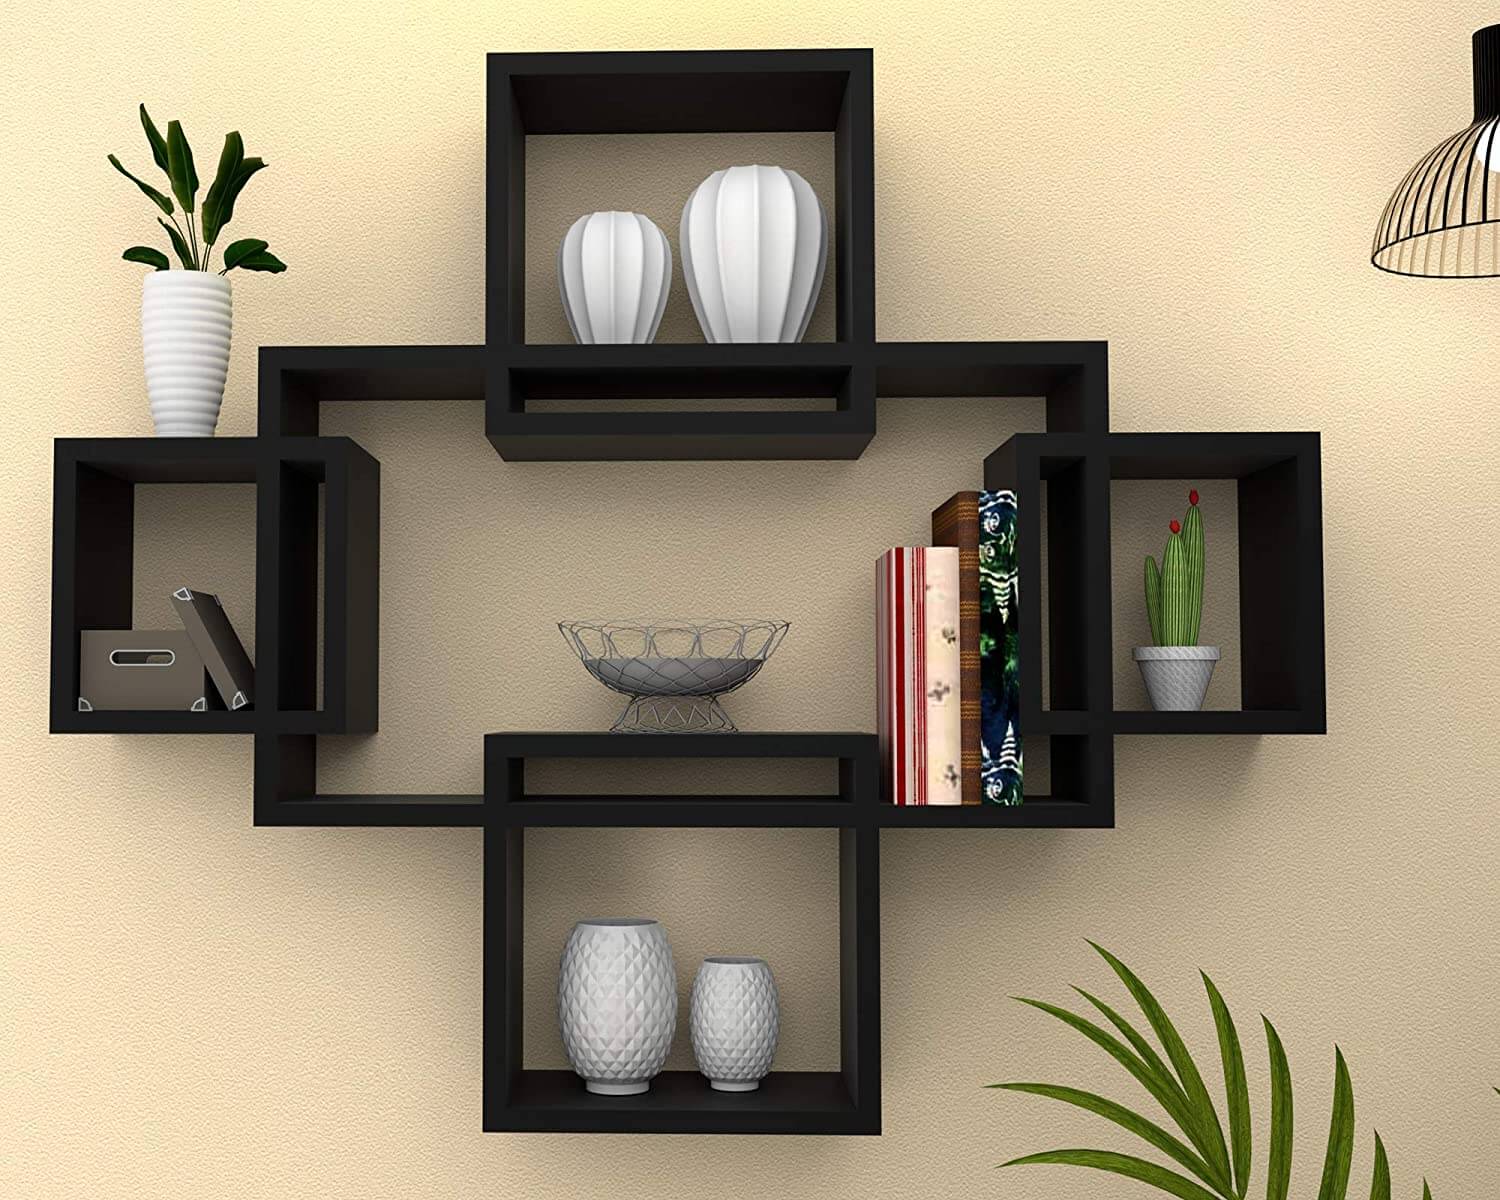 Shelves mount